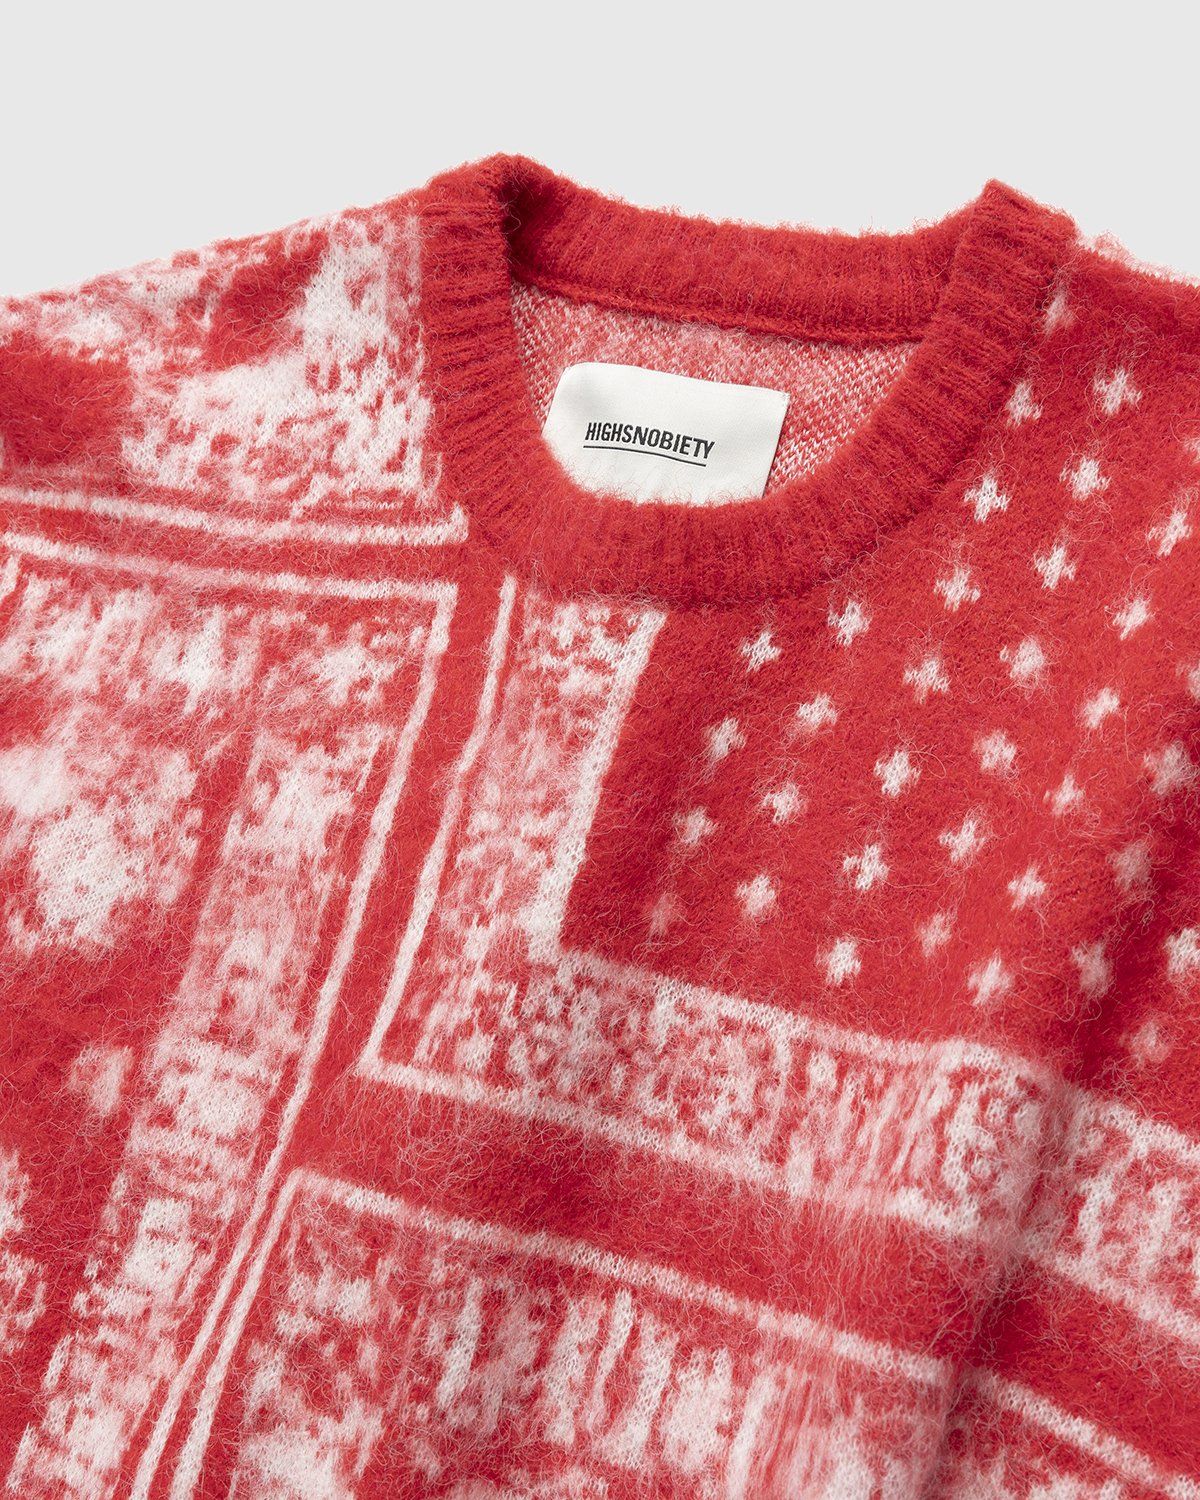 Highsnobiety – Bandana Alpaca Sweater Red - Knitwear - Red - Image 4